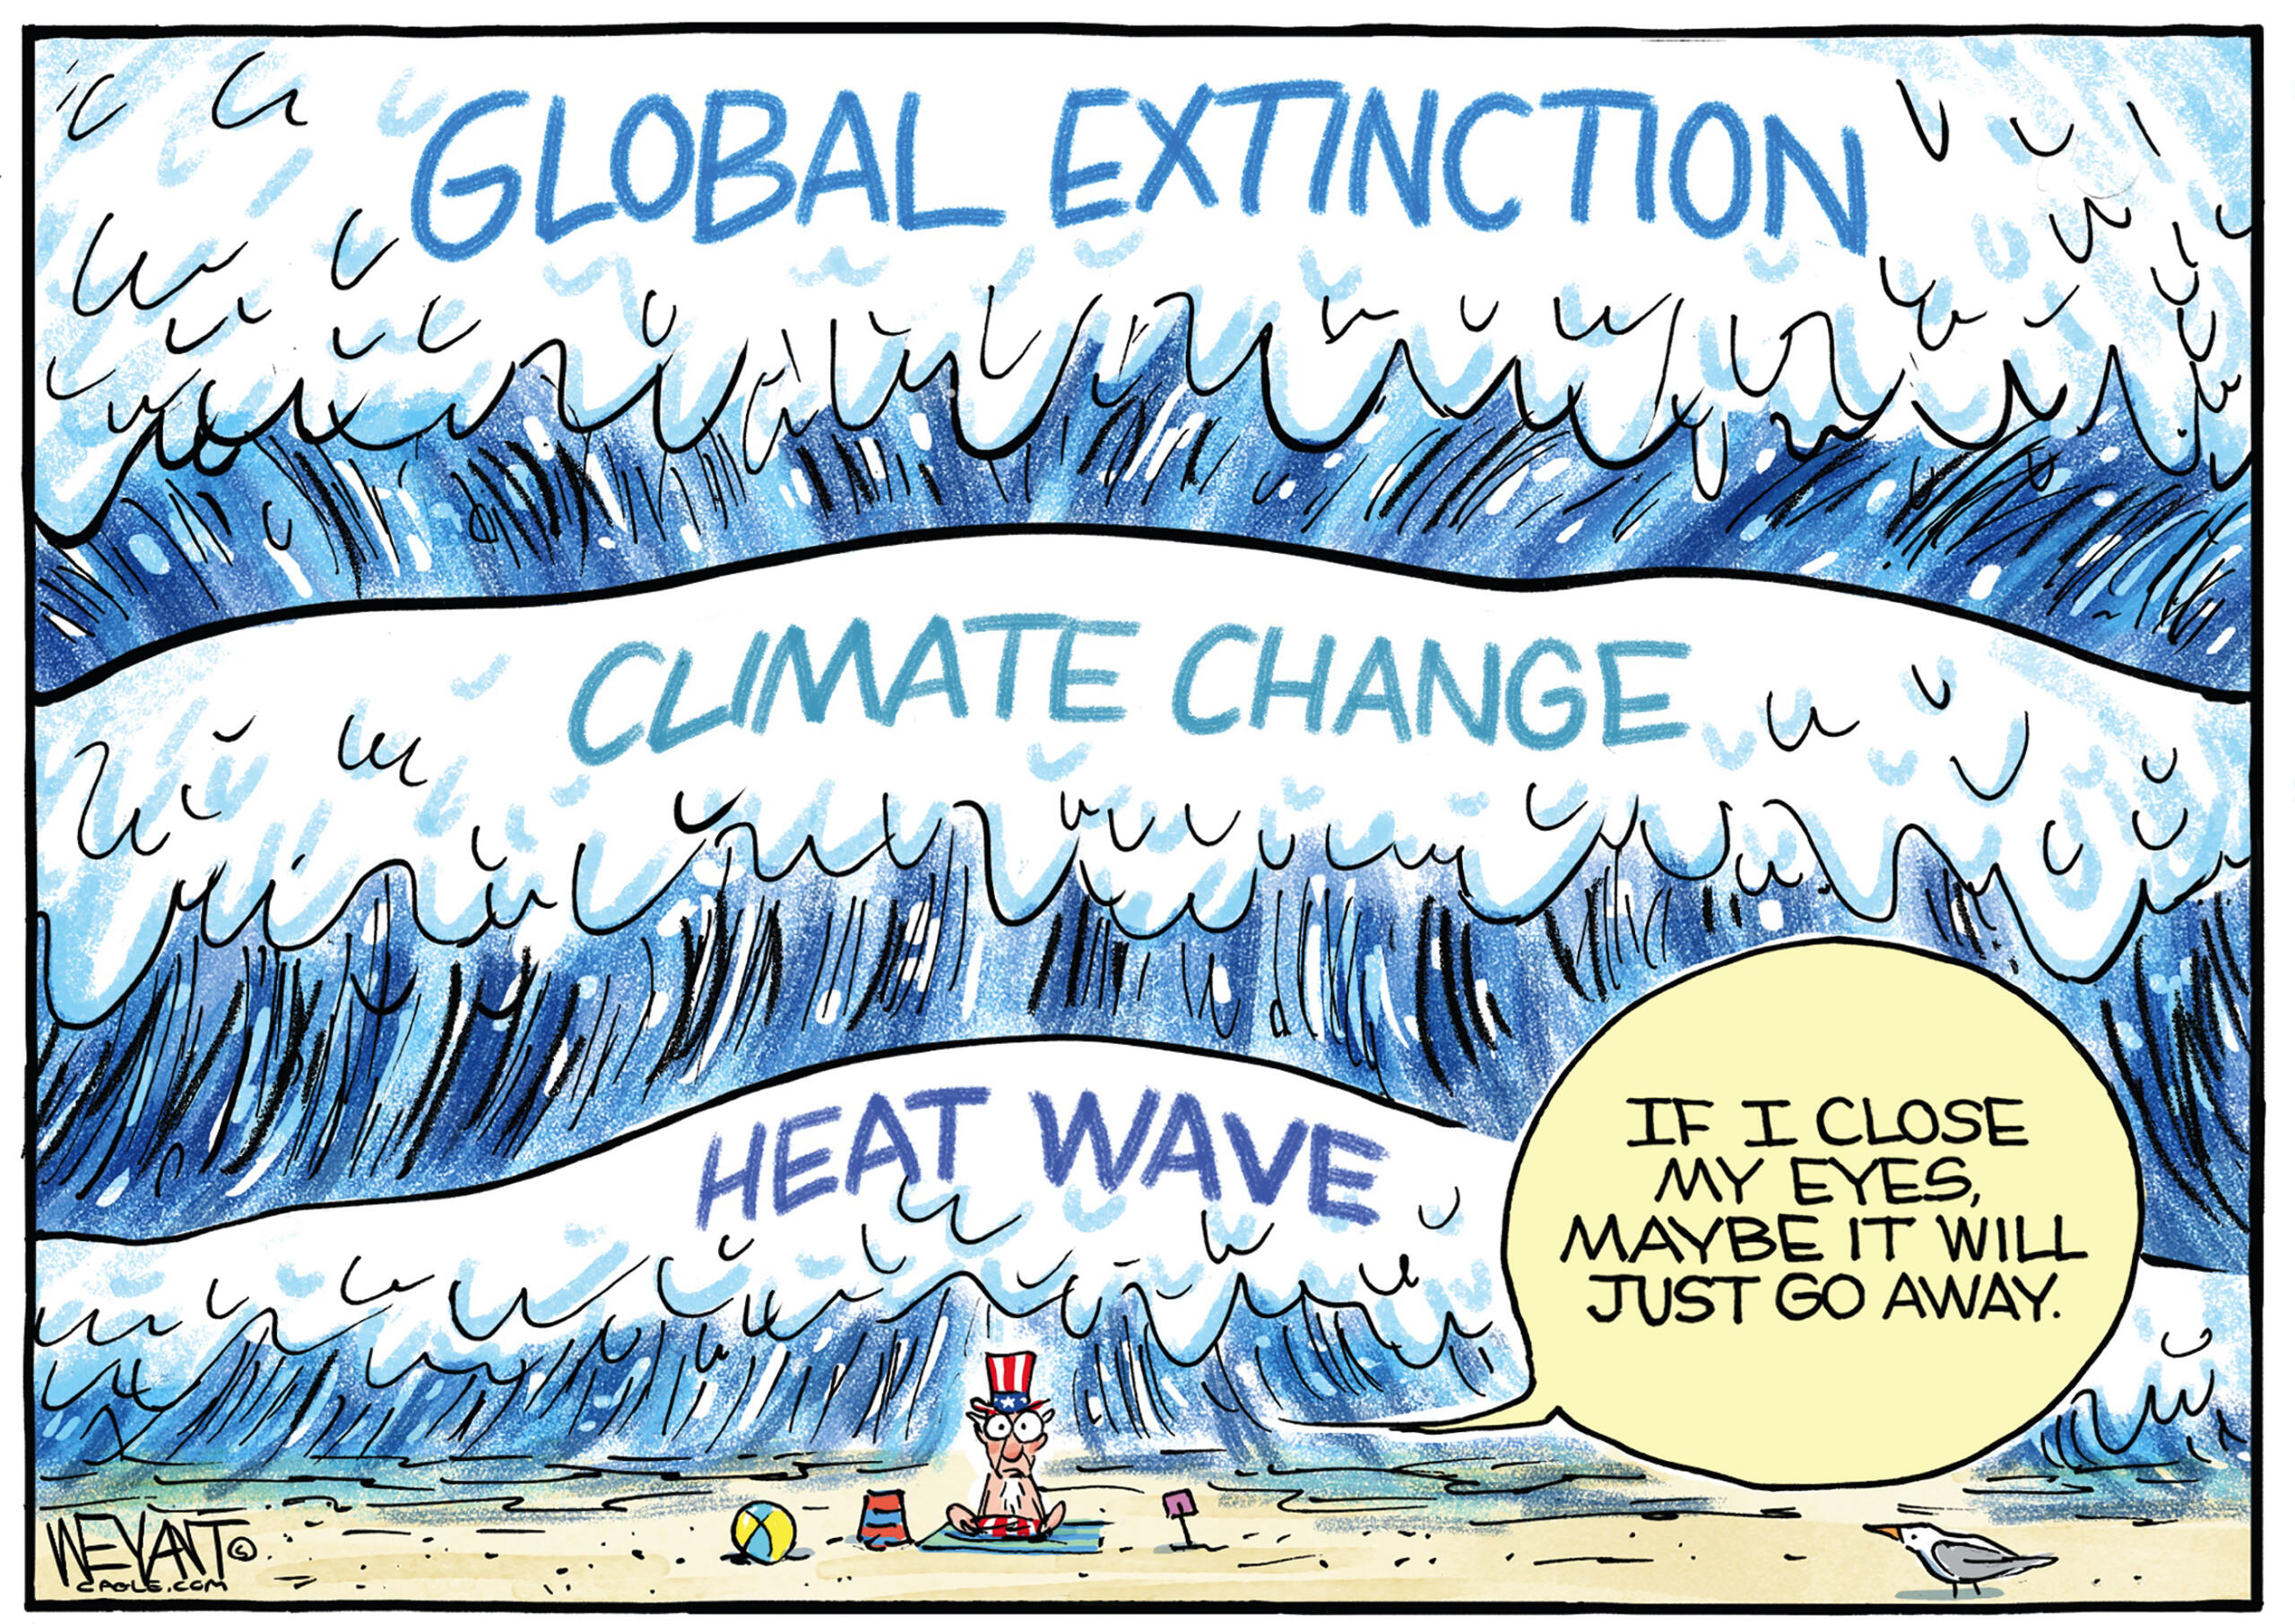 July 30: Global warming